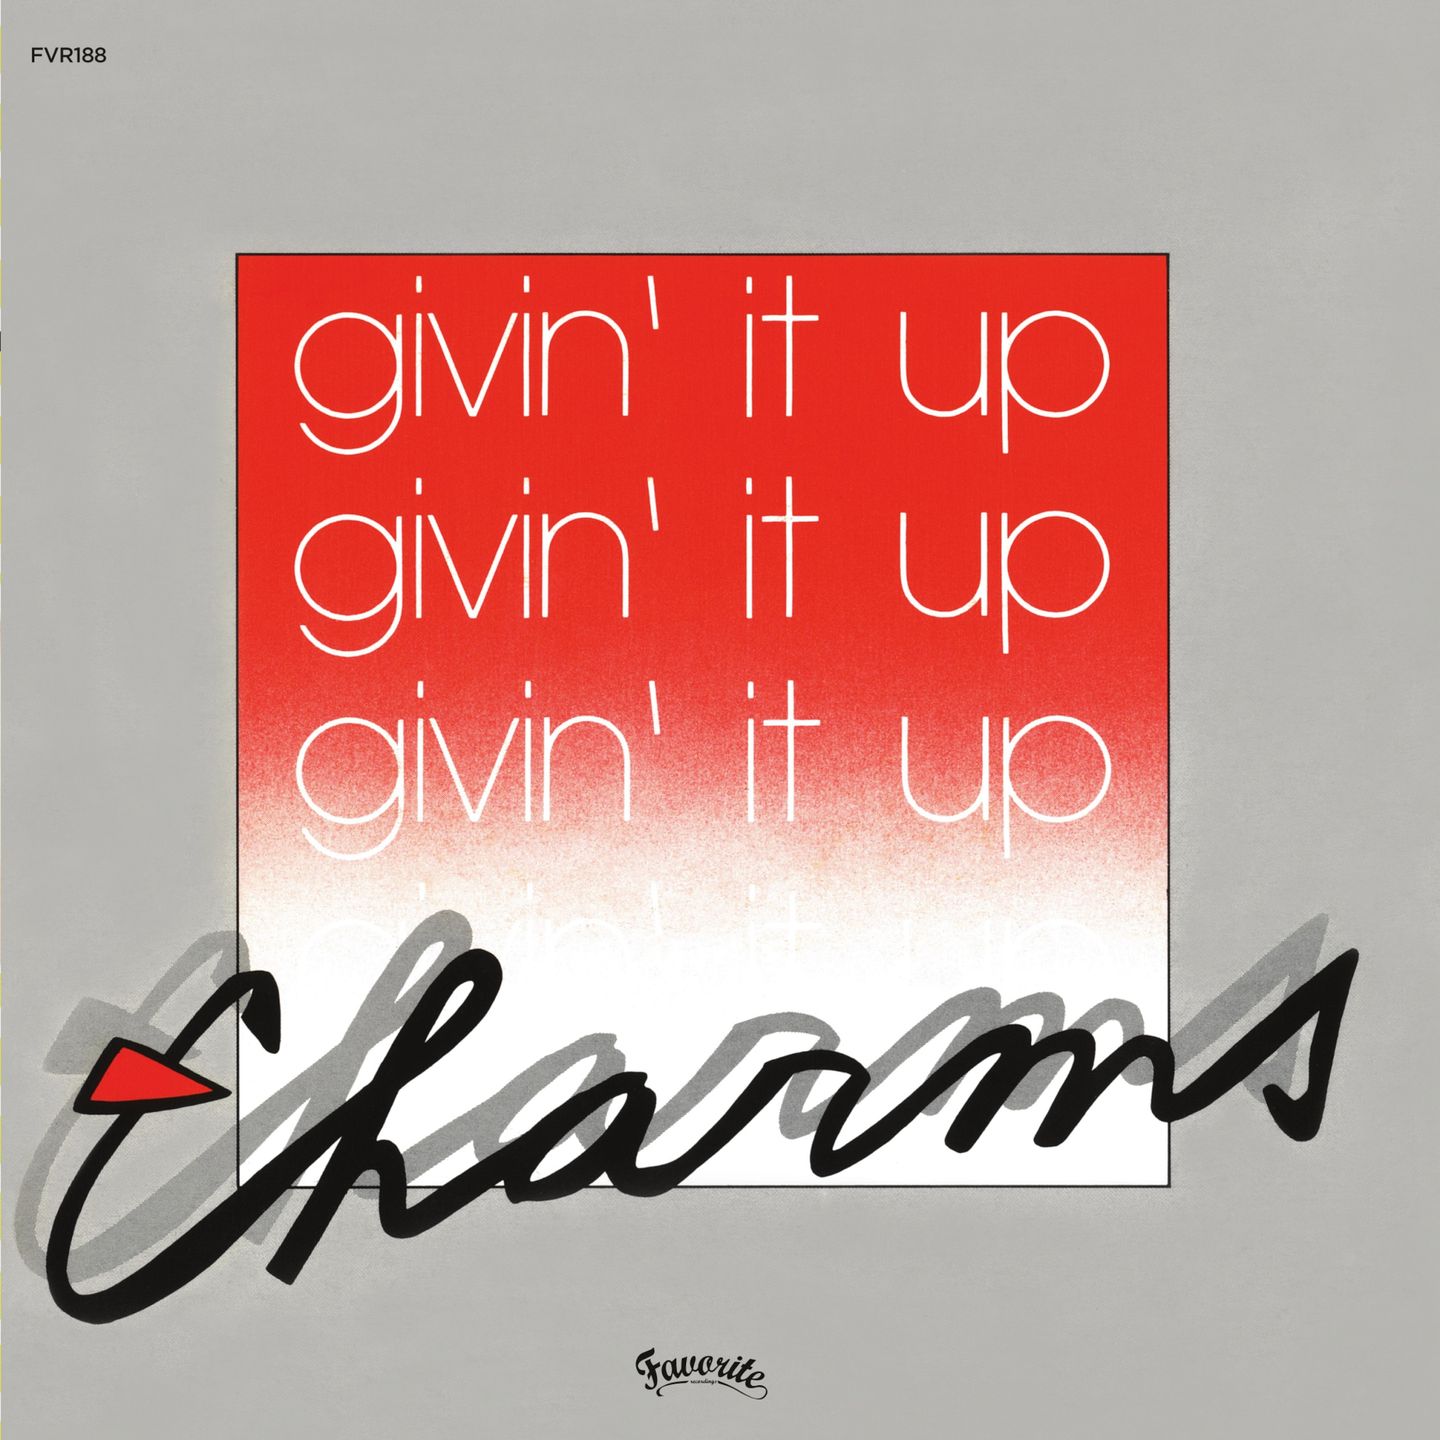 Charms / France-Lise - Givin’ It Up / Pour Moi Ça Va : 7inch